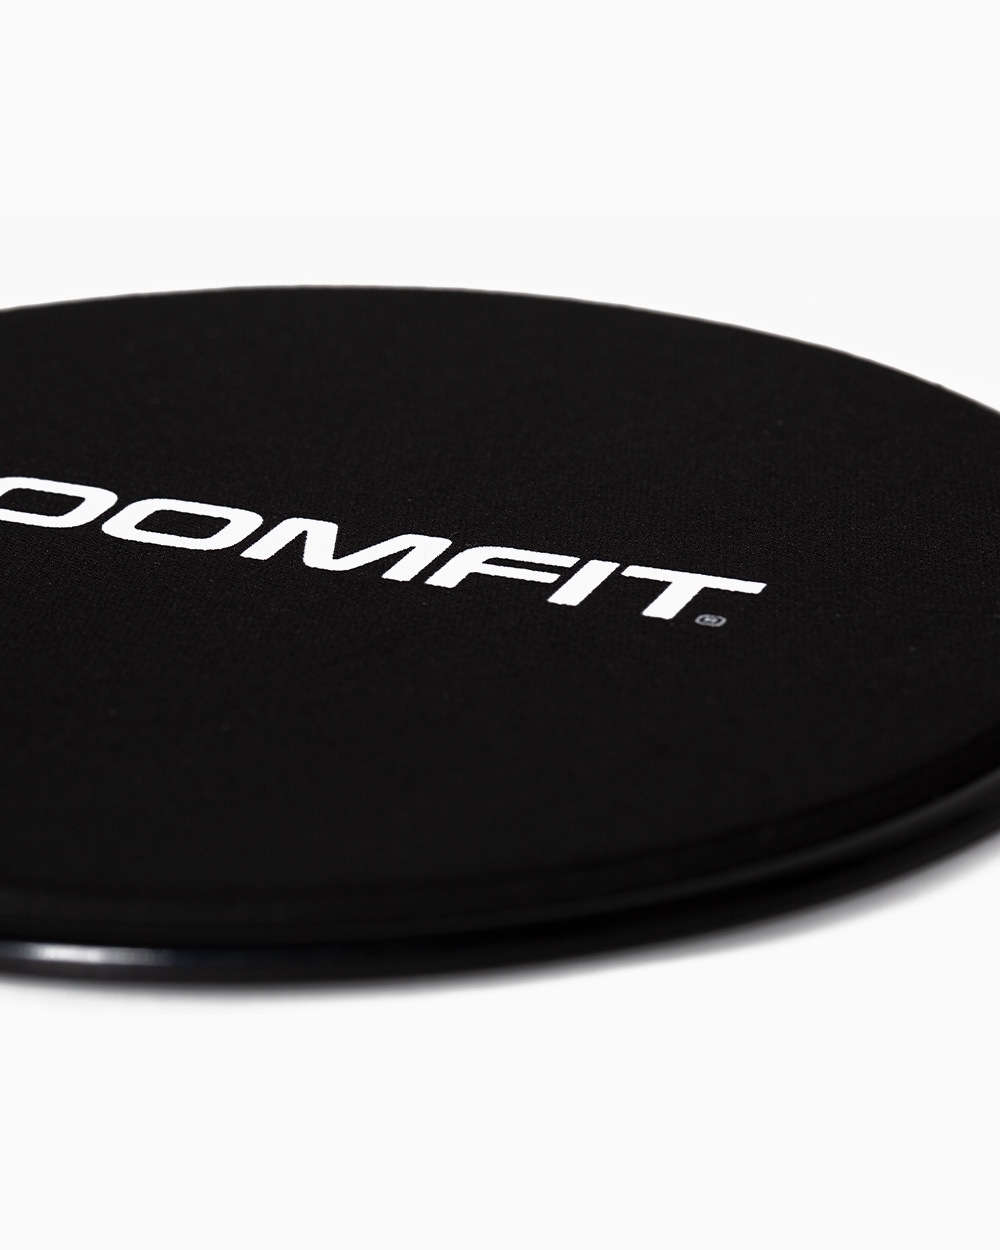 Discos Deslizantes Boomfit X2 - Sliders - Boomfit  MKP